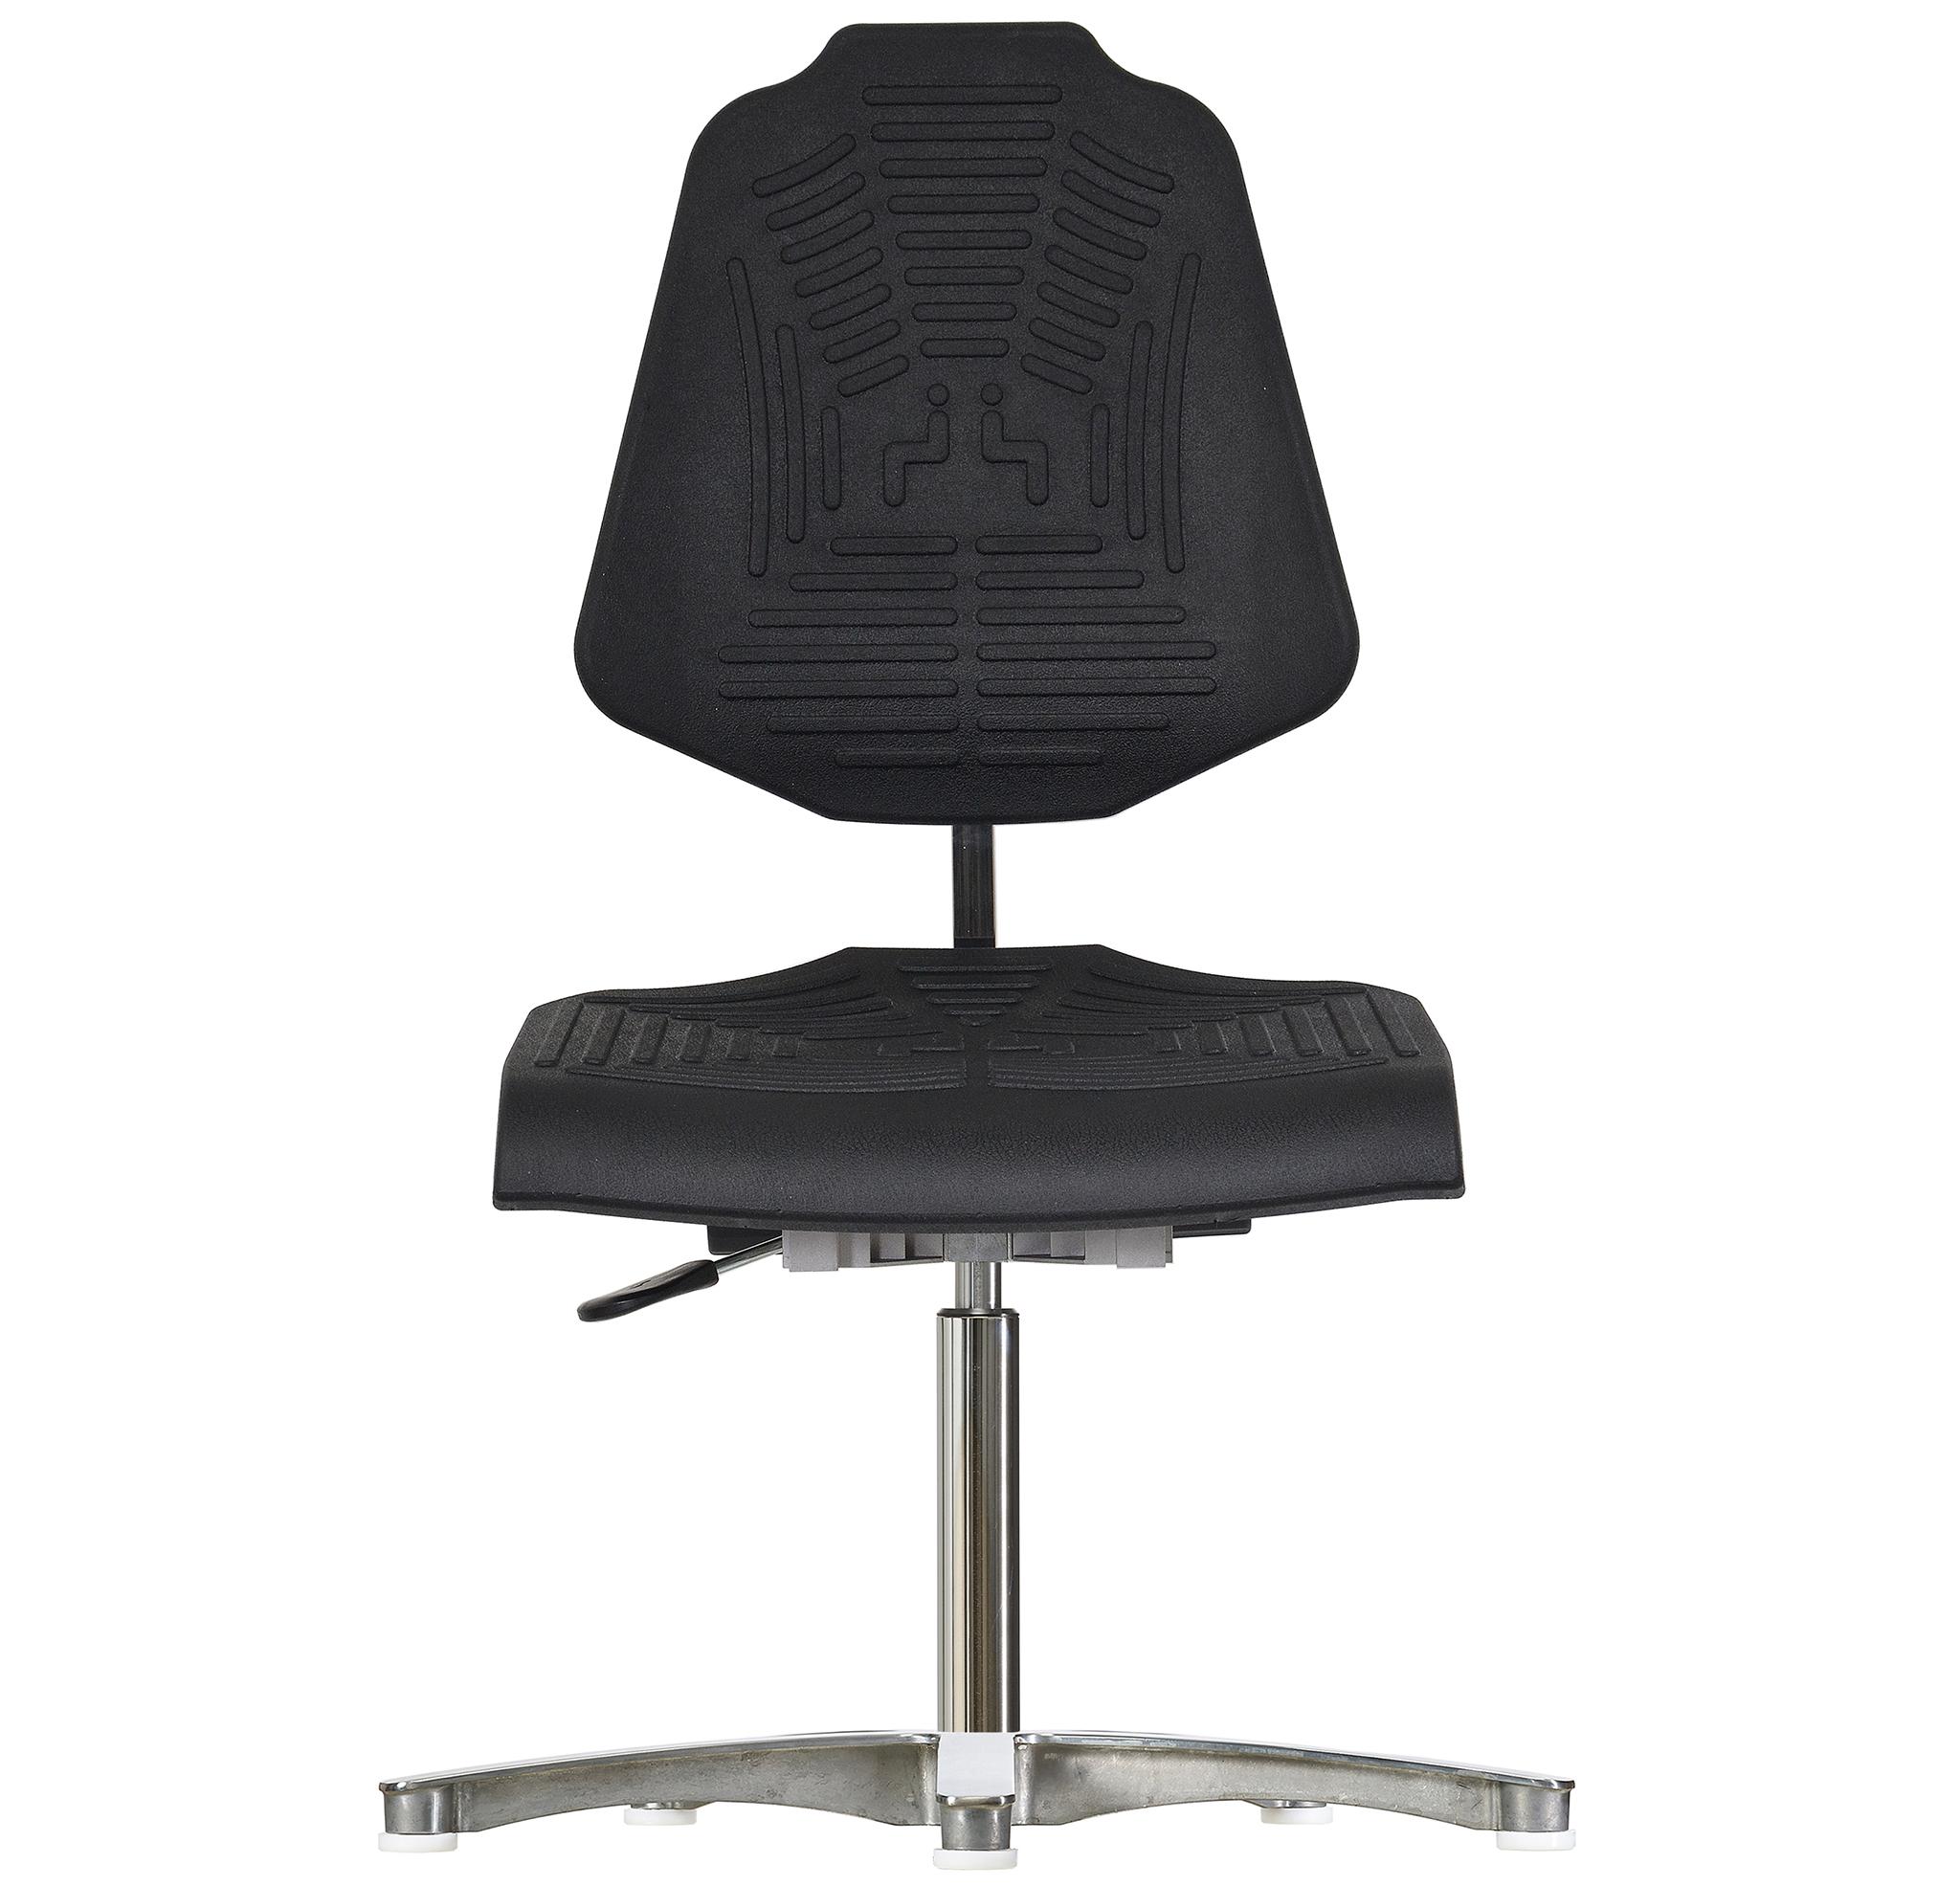 Werksitz - Siège ergonomique CLASSIC - WS 1210 E XL MASTER 150